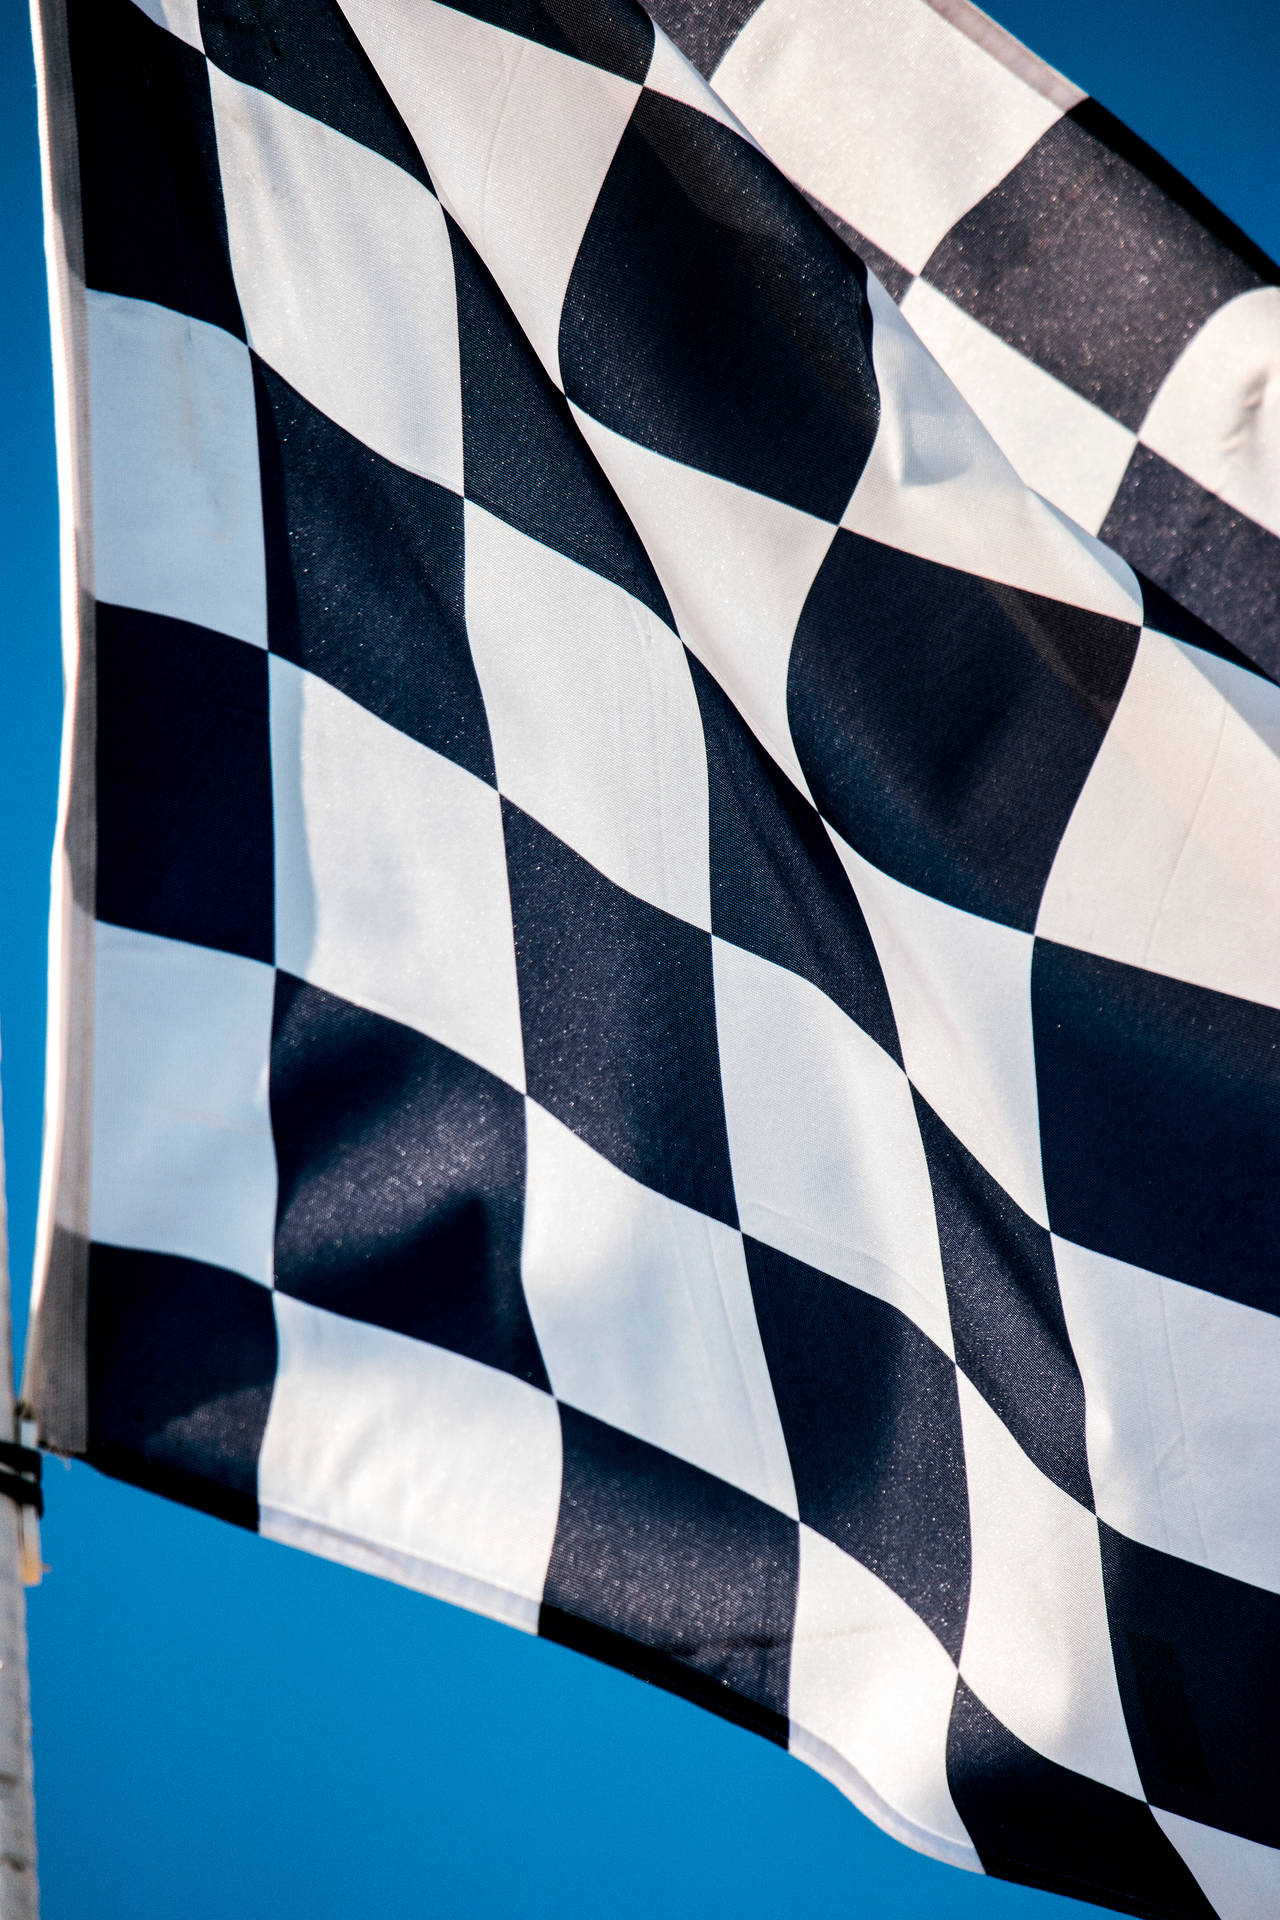 Checkered Race Flag